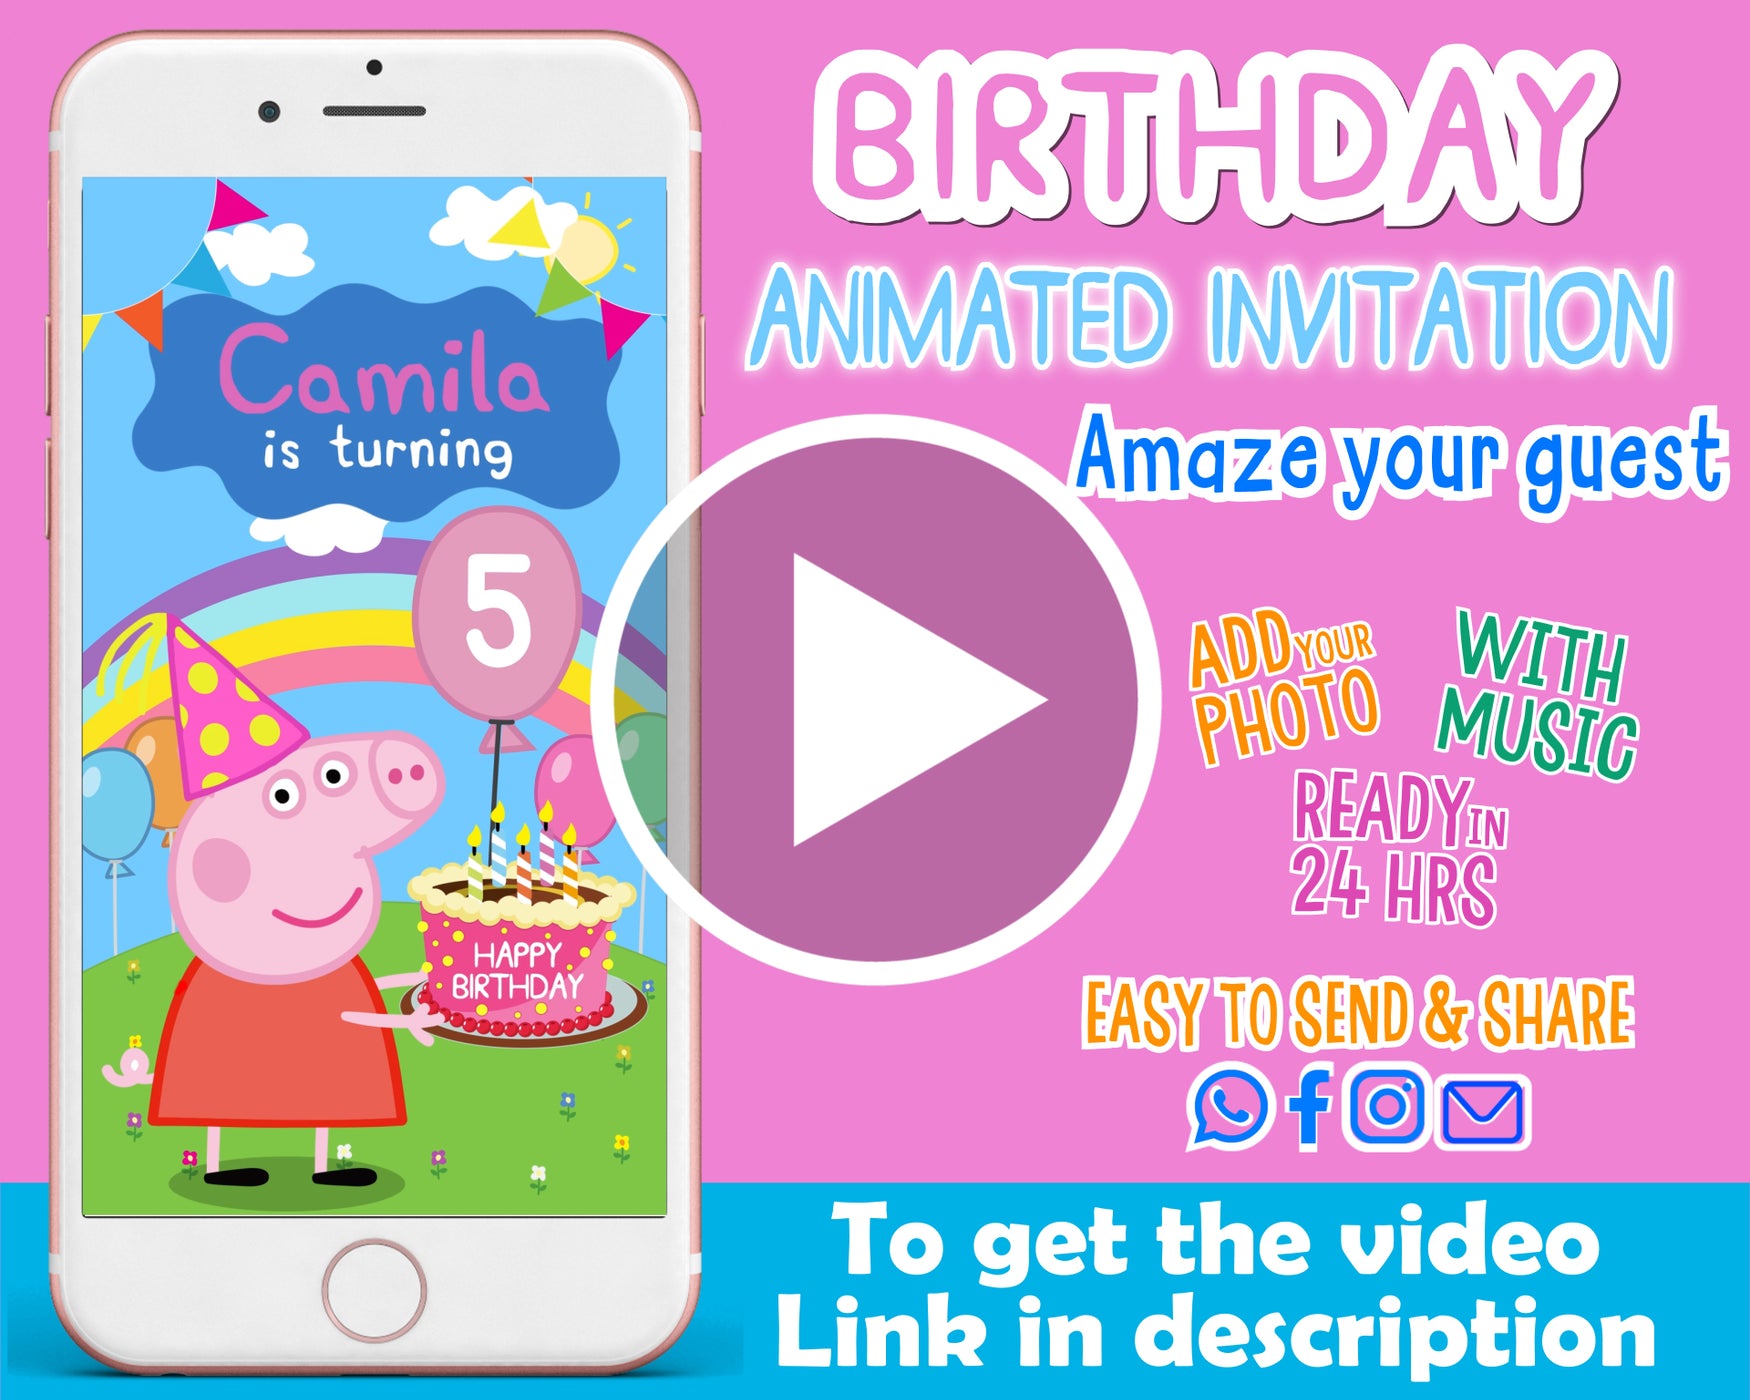 Peppa Pig Video Invitation | Peppa Pig  Birthday Party Animated Invitation